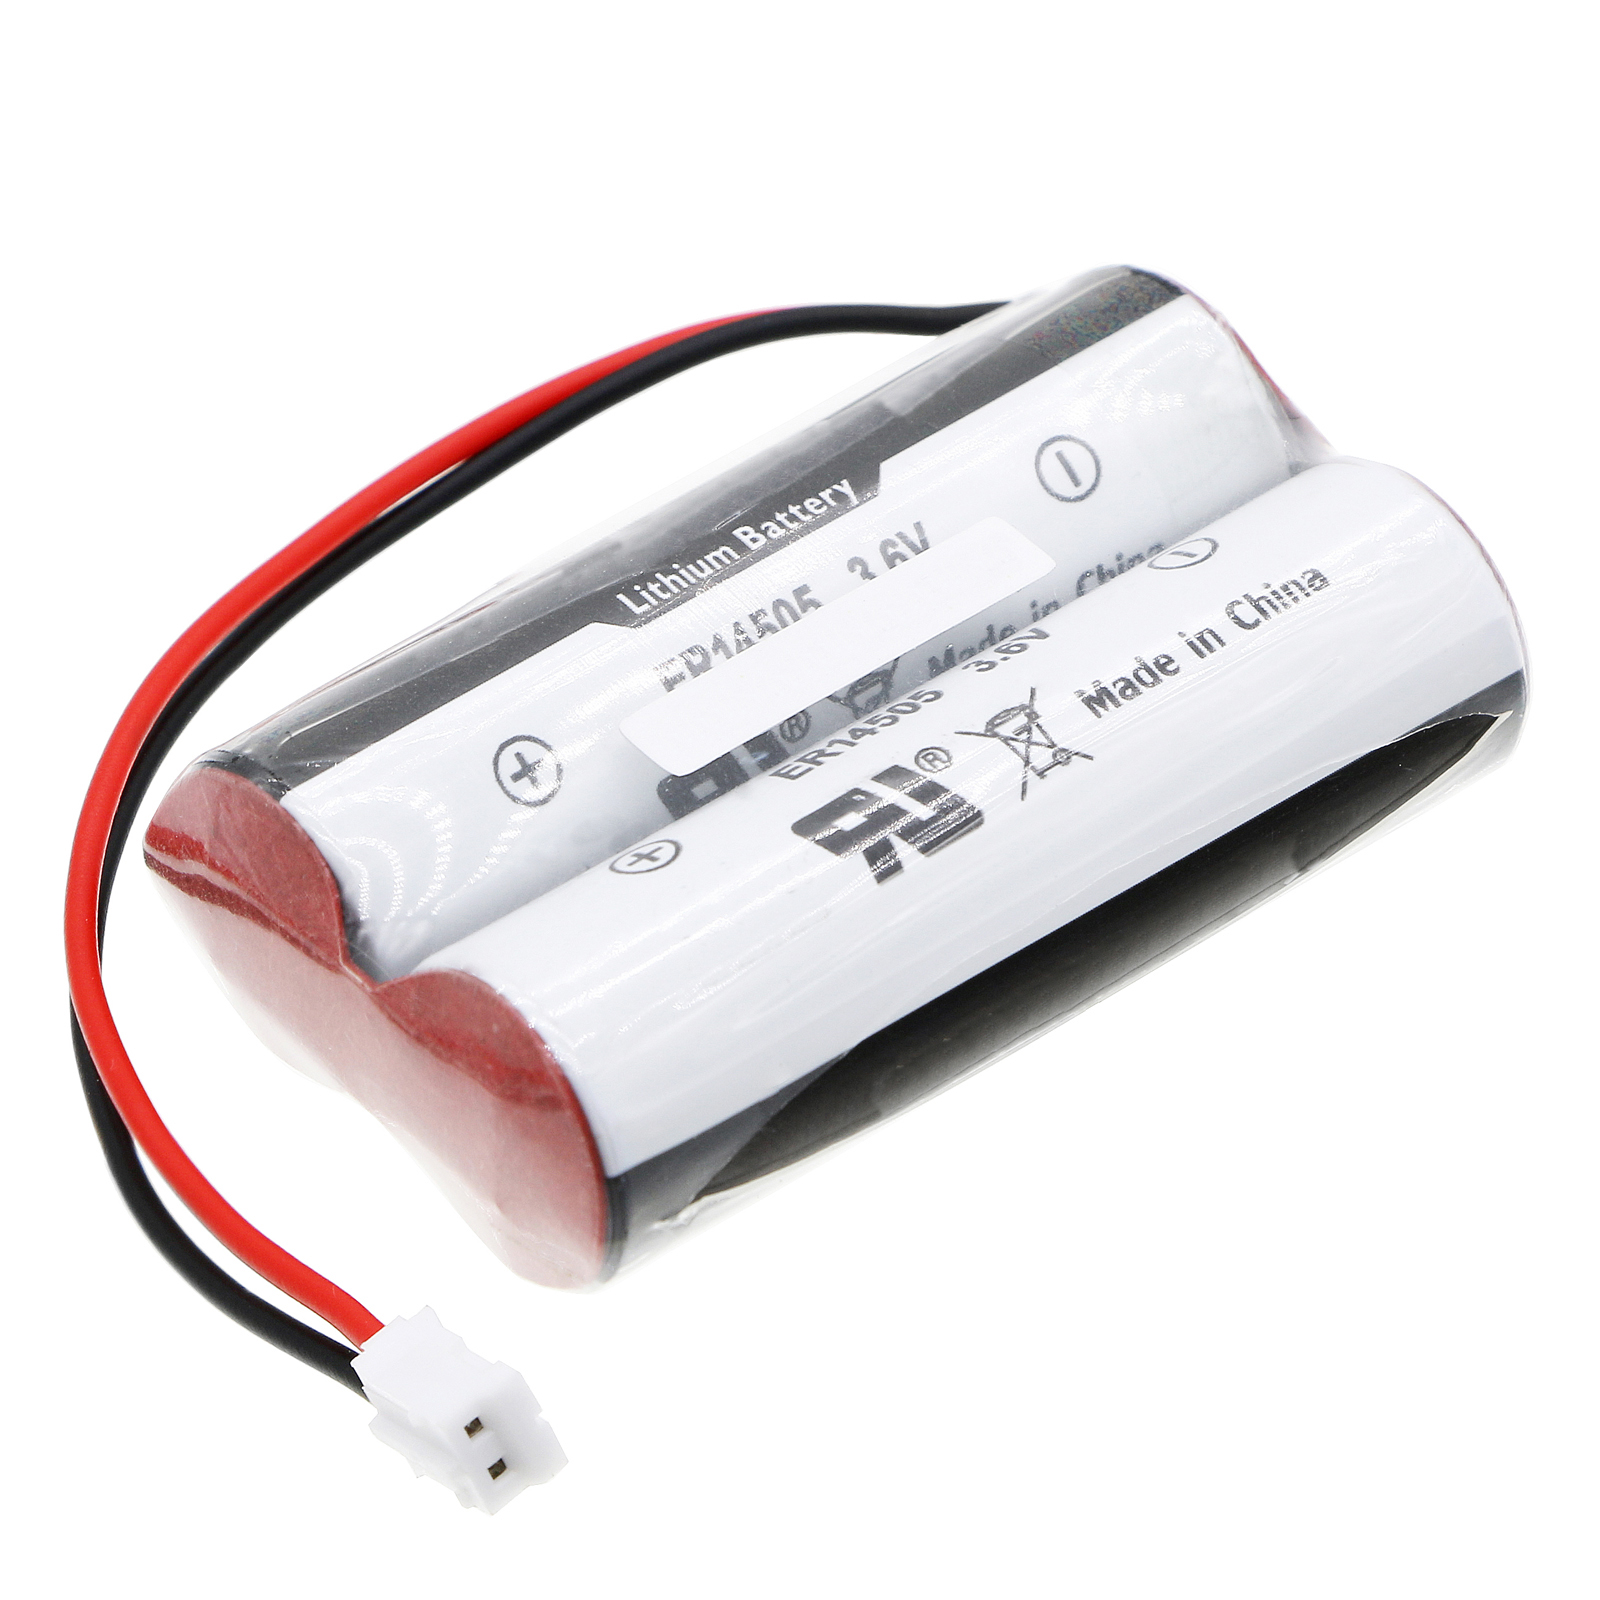 Synergy Digital Alarm System Battery, Compatible with Delta Dore 2280015 Alarm System Battery (Li-SOCl2, 3.6V, 5400mAh)